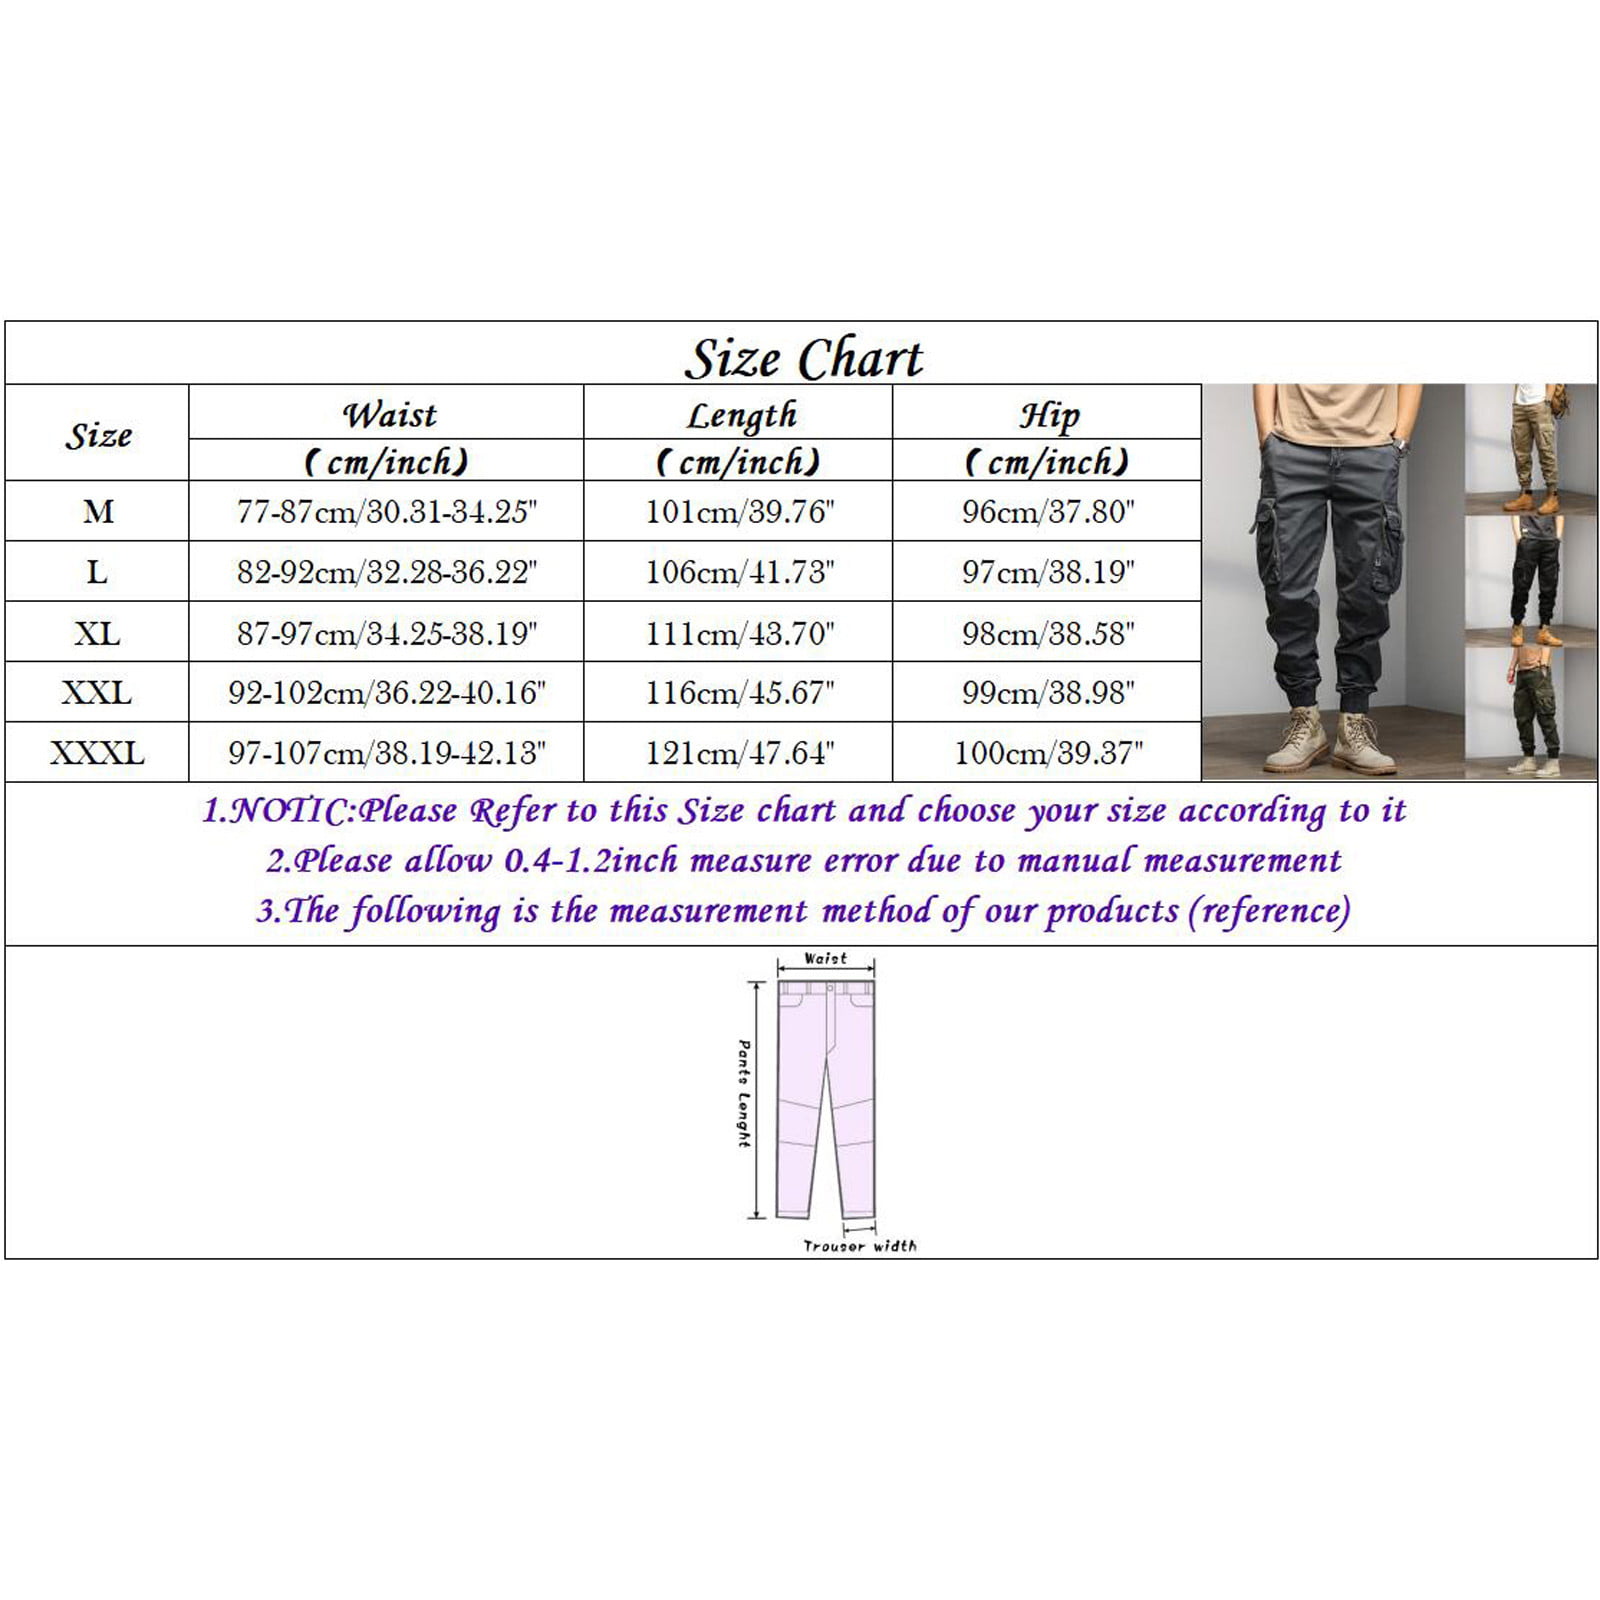 kpoplk Cargo Joggers Men,Mens Fashion Joggers Sports Pants Workout Trousers  Casual Cargo Pants(Khaki,XXL)